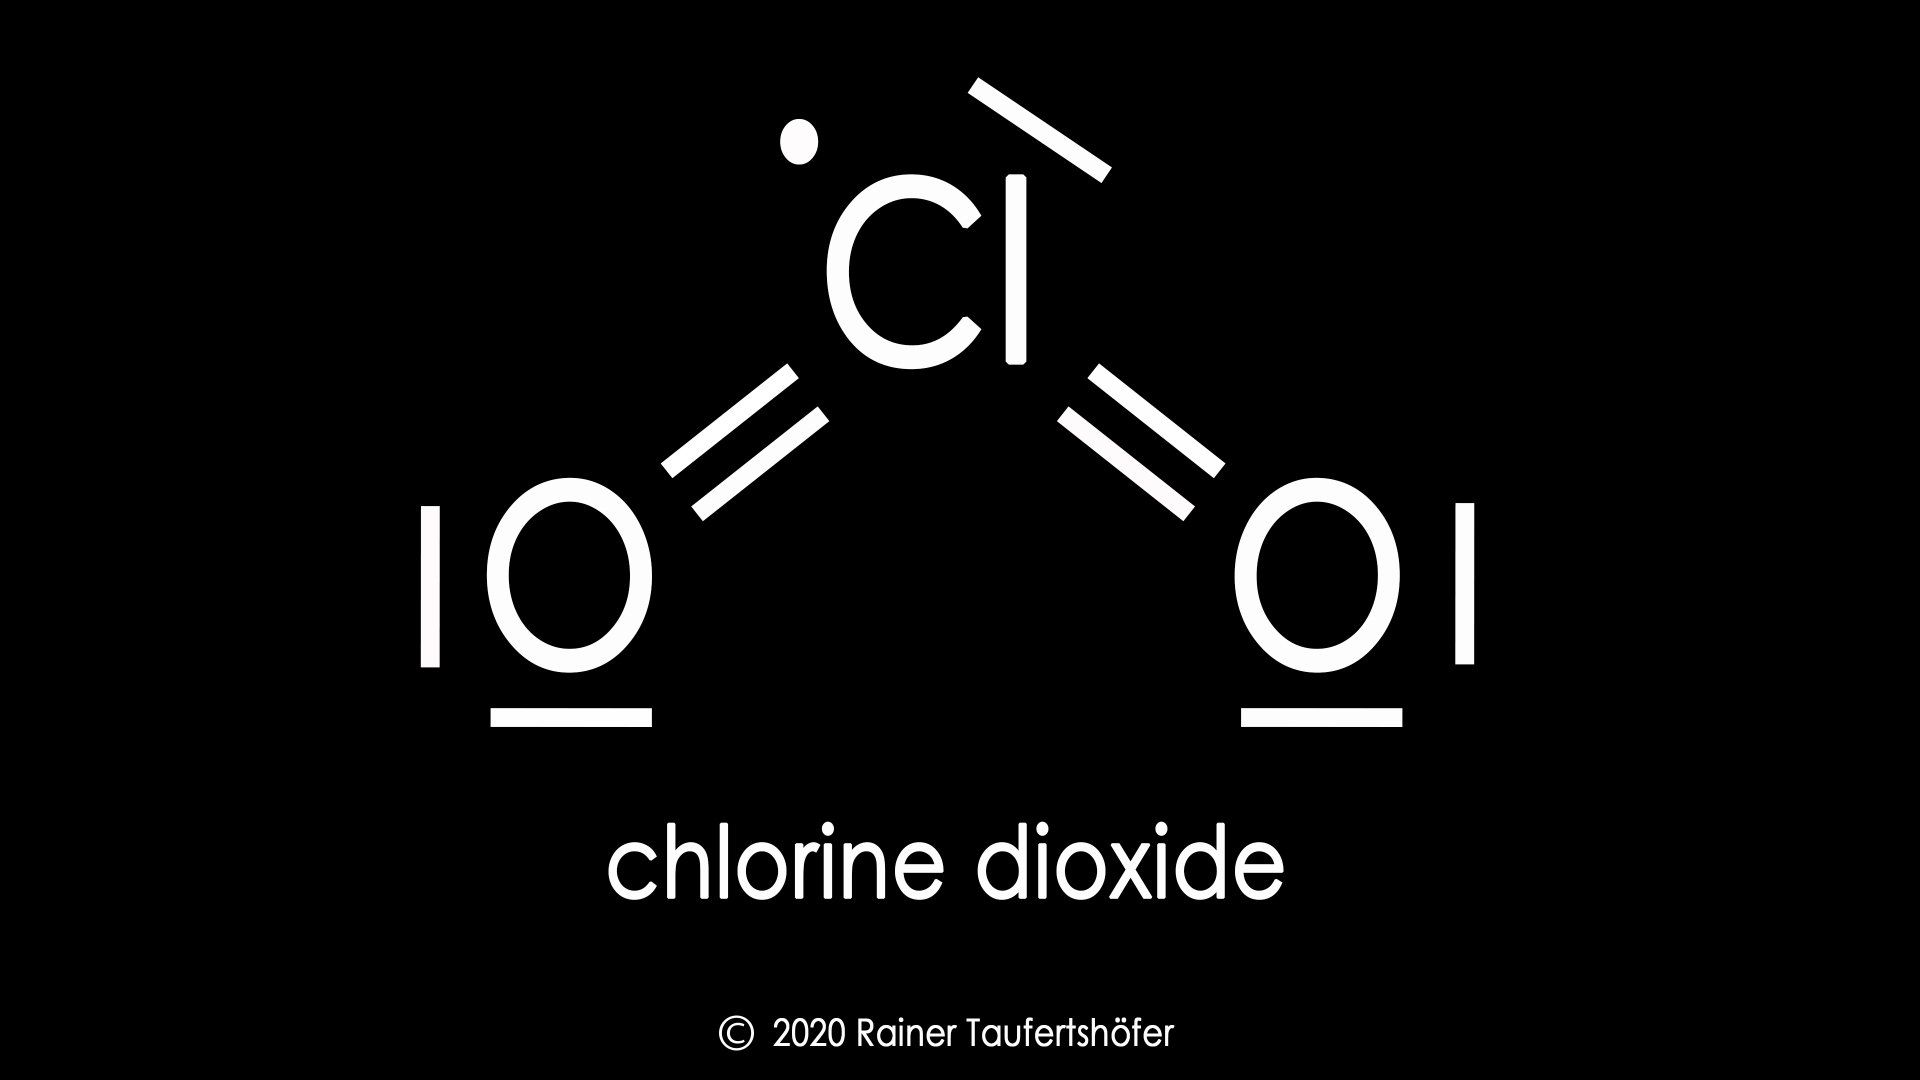 Aktuelle TOP-News zu Chlordioxid Patent